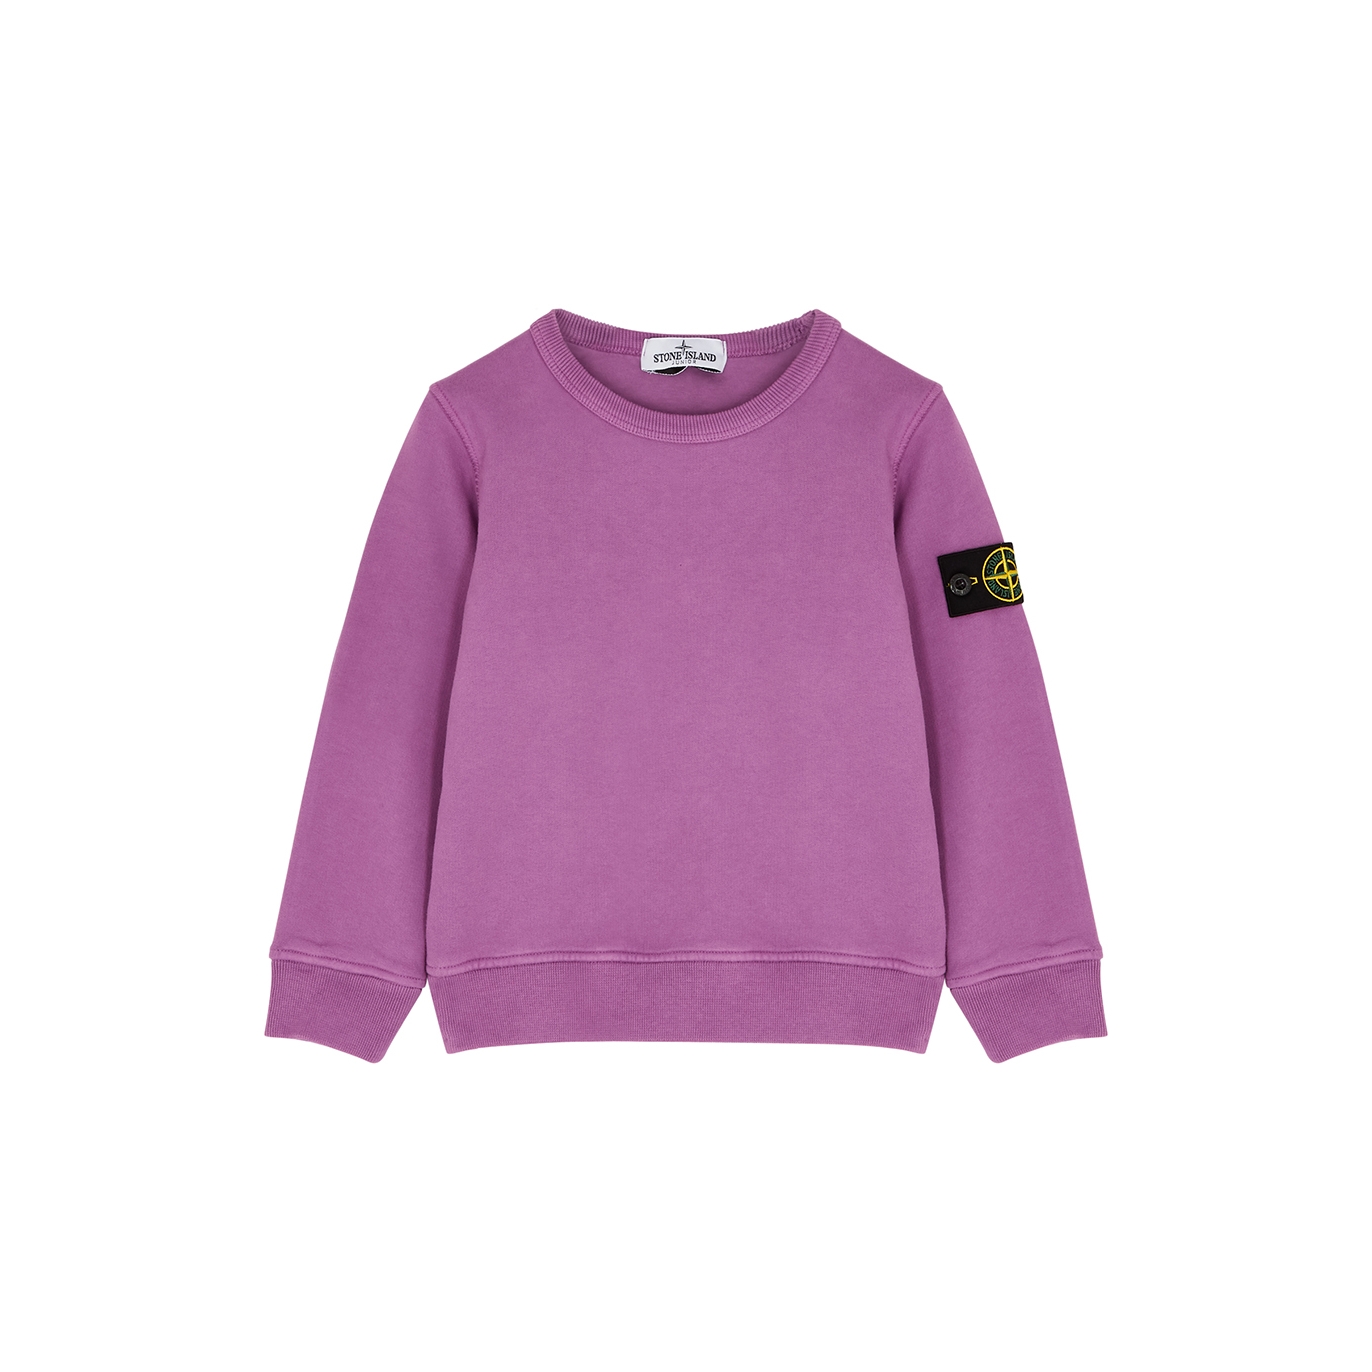 Stone Island Kids Purple Cotton Sweatshirt (6-8 Years) - Fuchsia - 6 Years